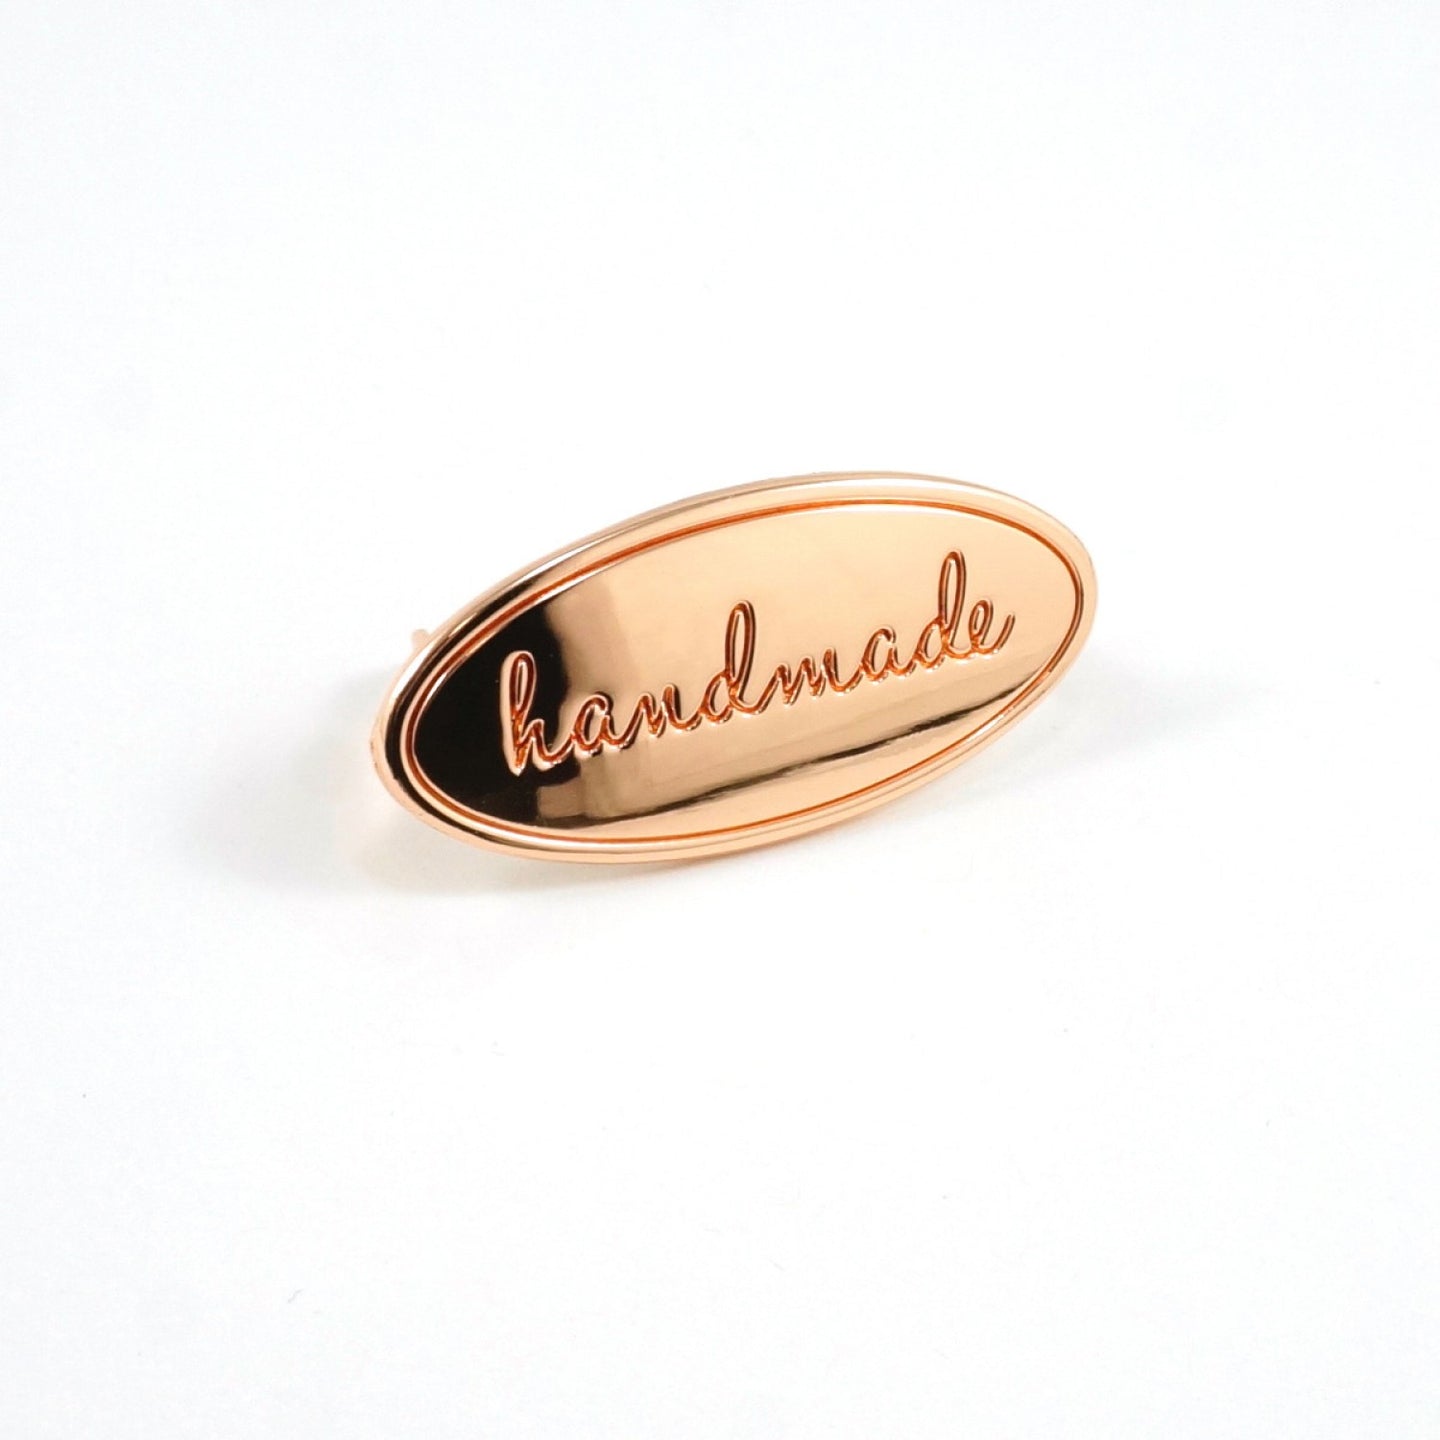 Metal Bag Label - Oval - Handmade in Copper